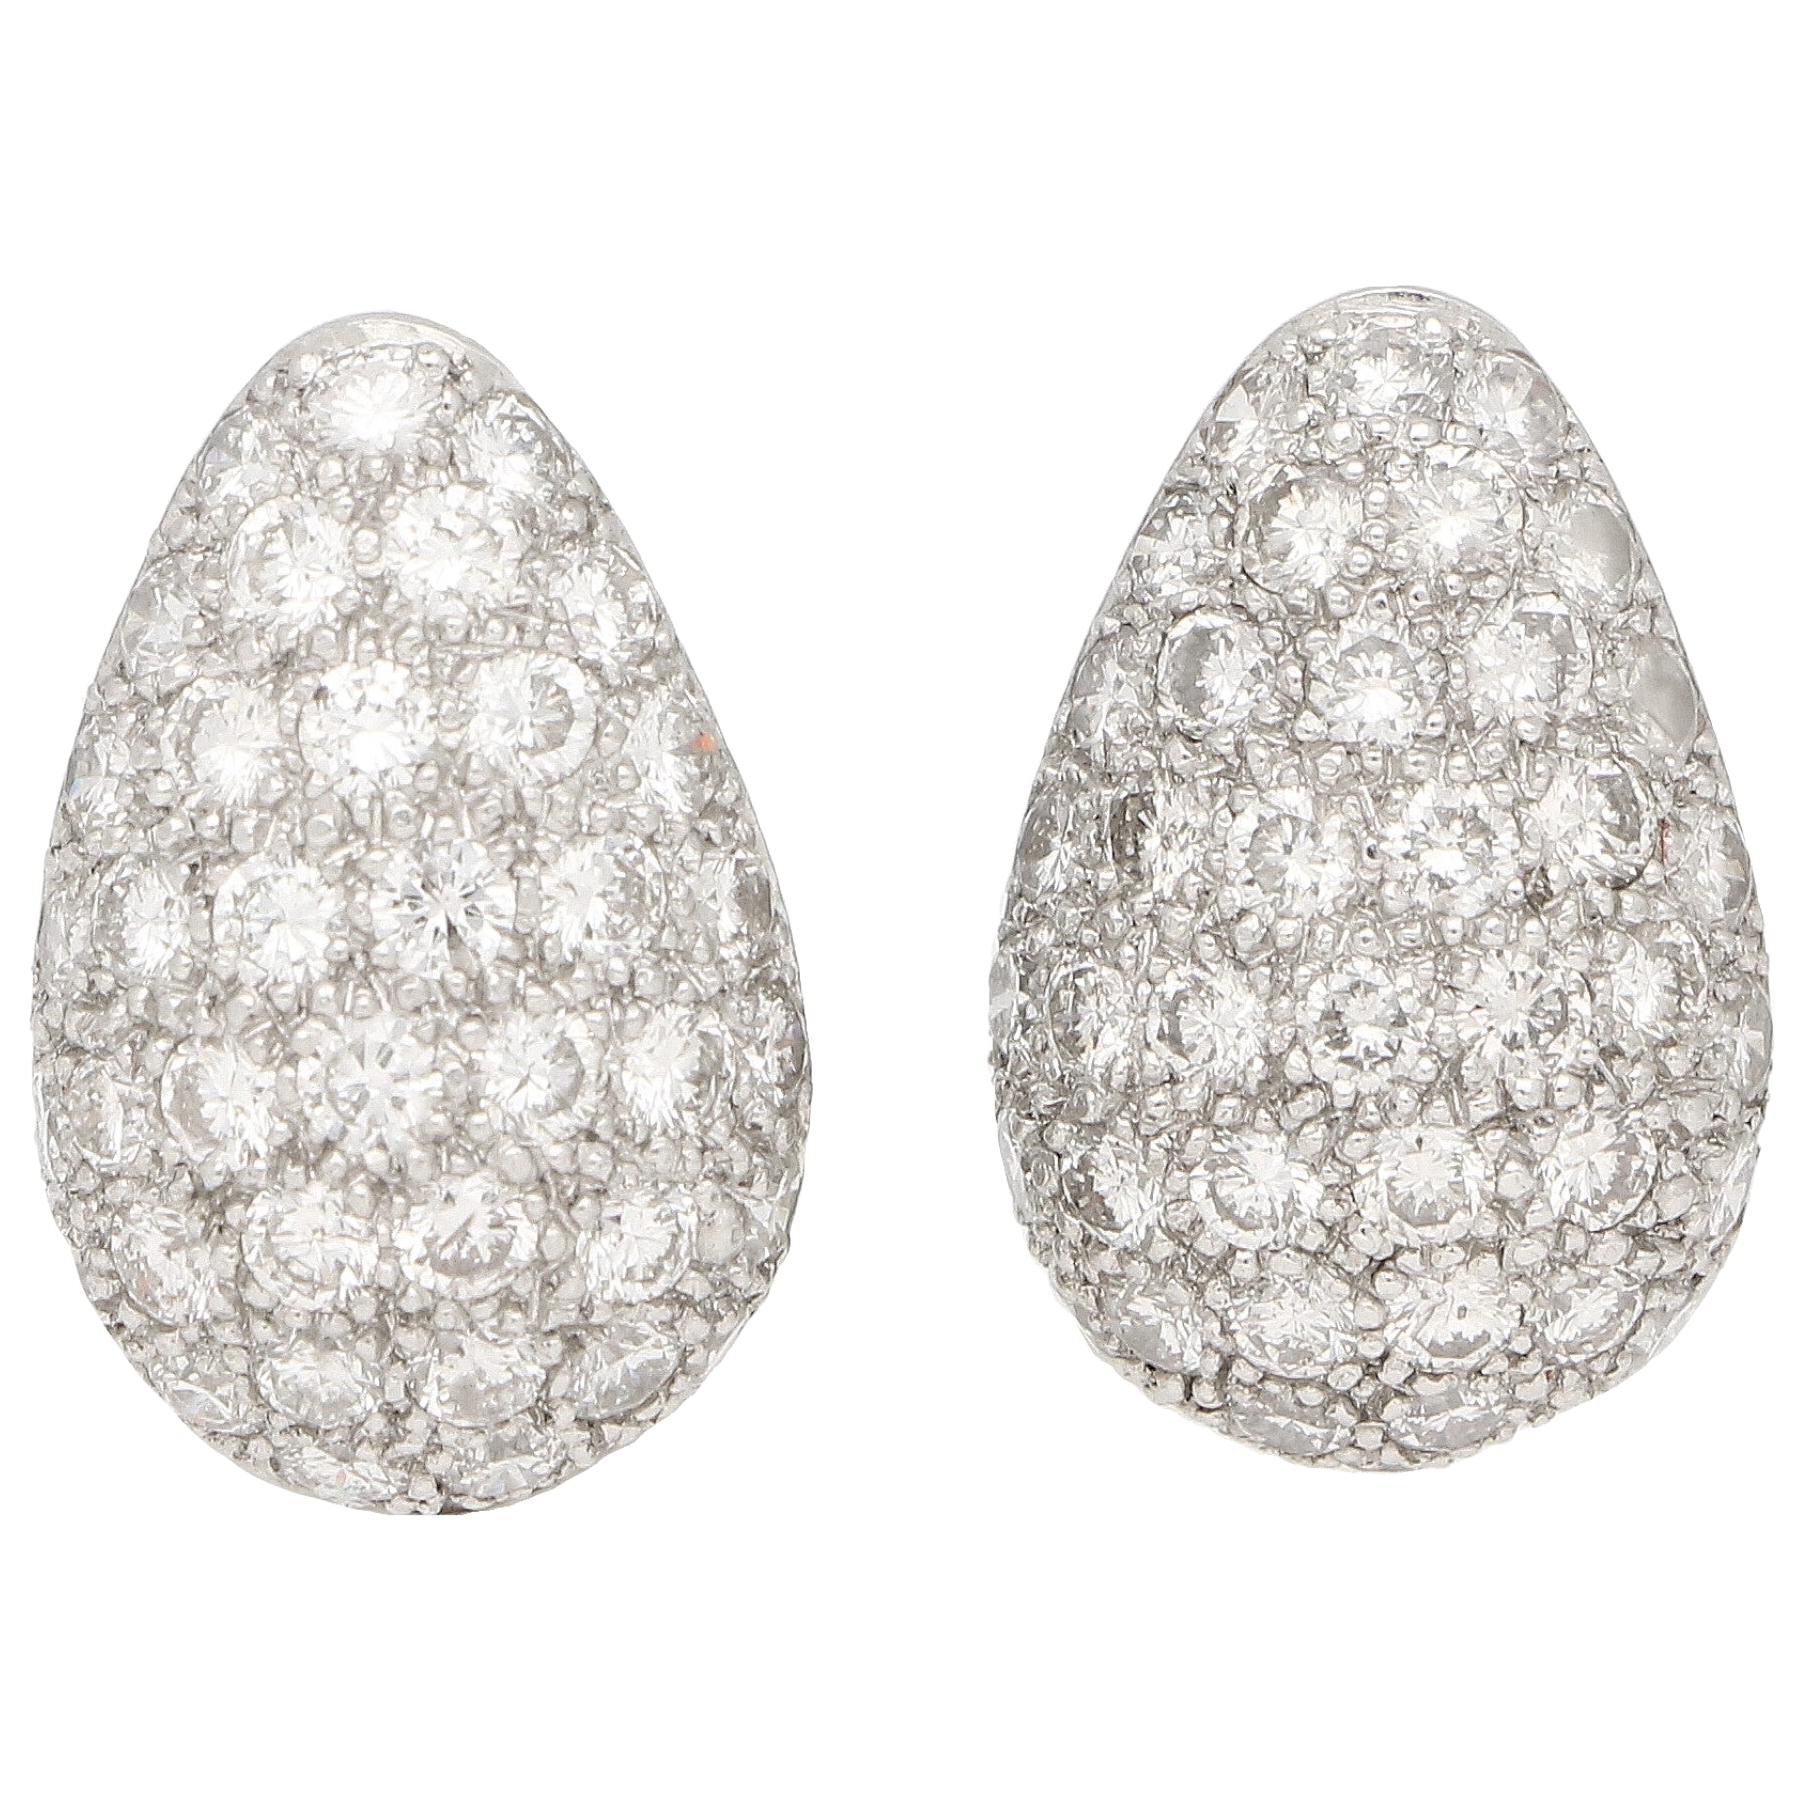 Diamond Pear Shaped Earrings Set in Platinum